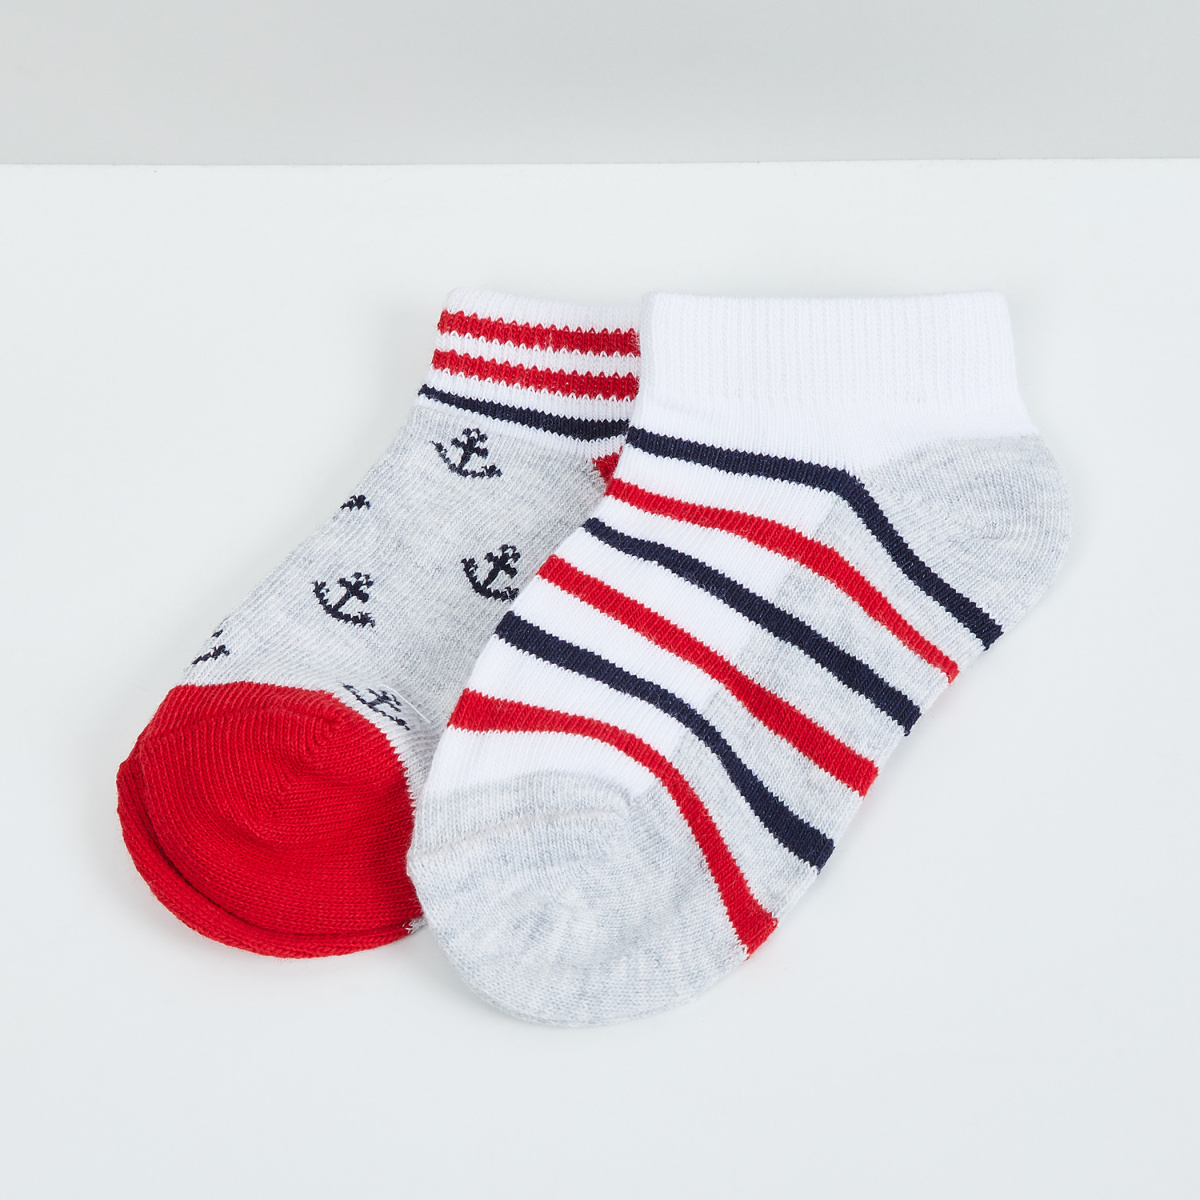 MAX Woven Design Socks- Set of 2